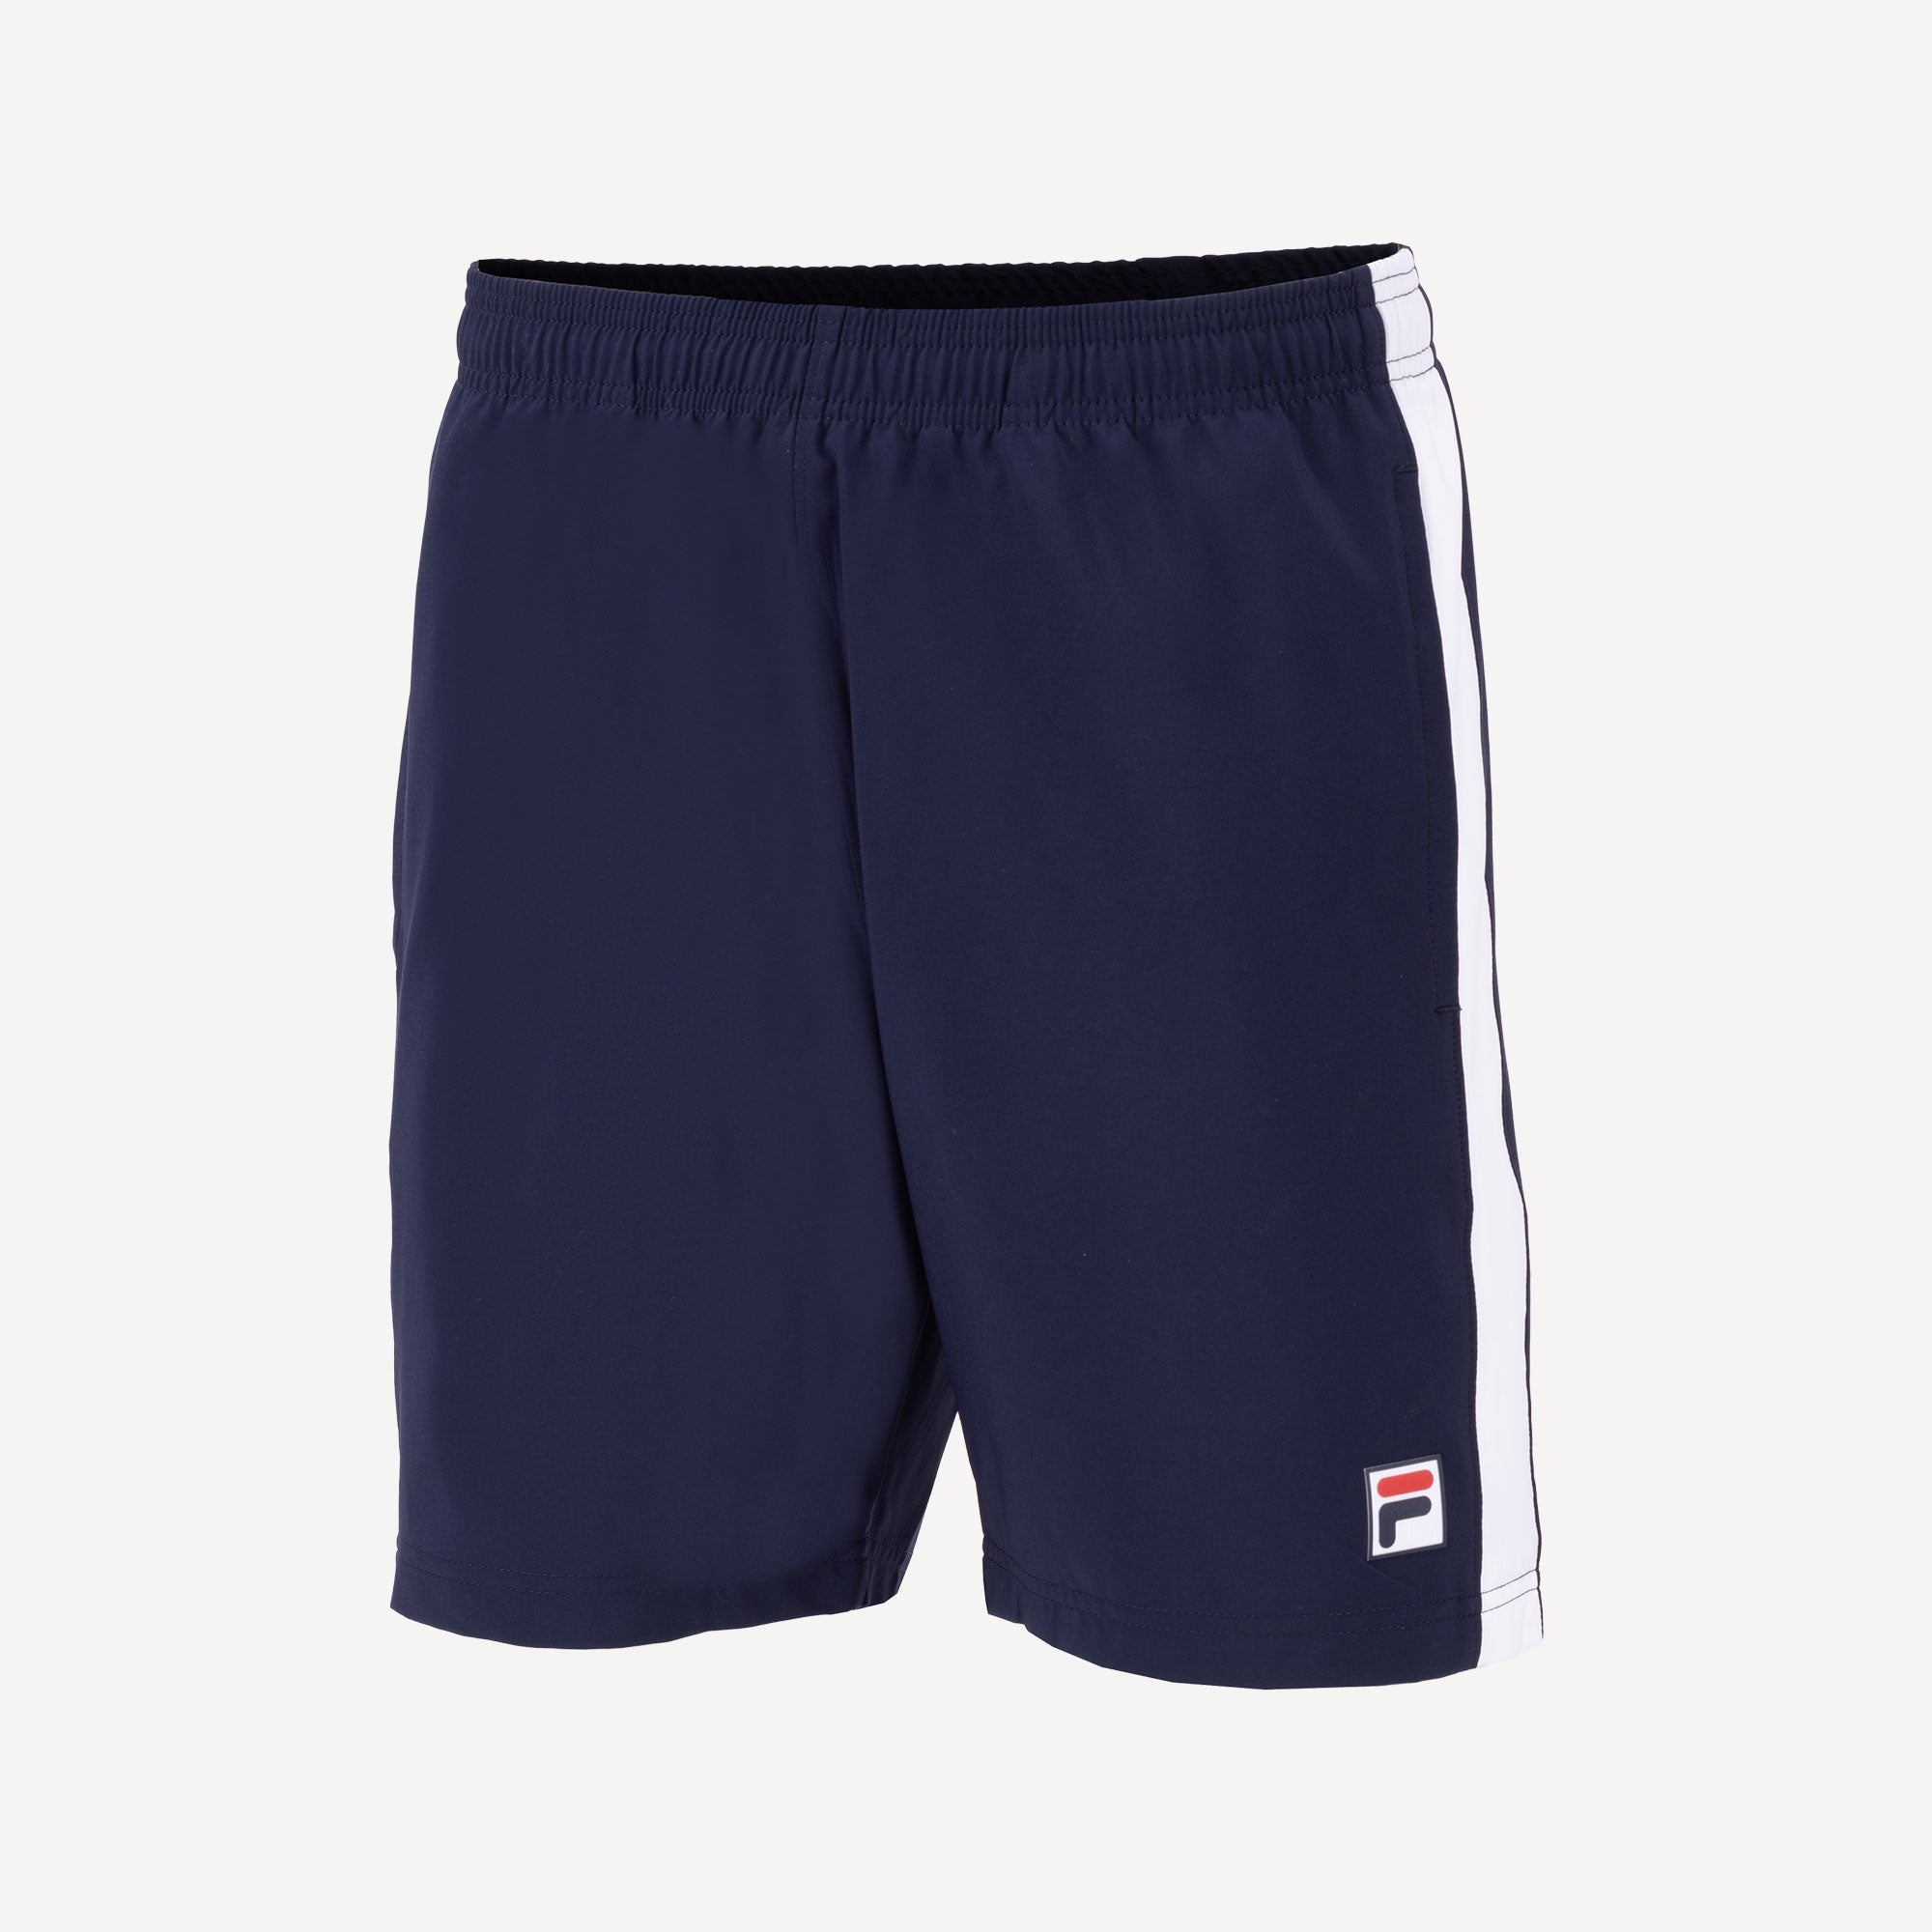 Fila Jakob Men's Tennis Shorts - Dark Blue (1)